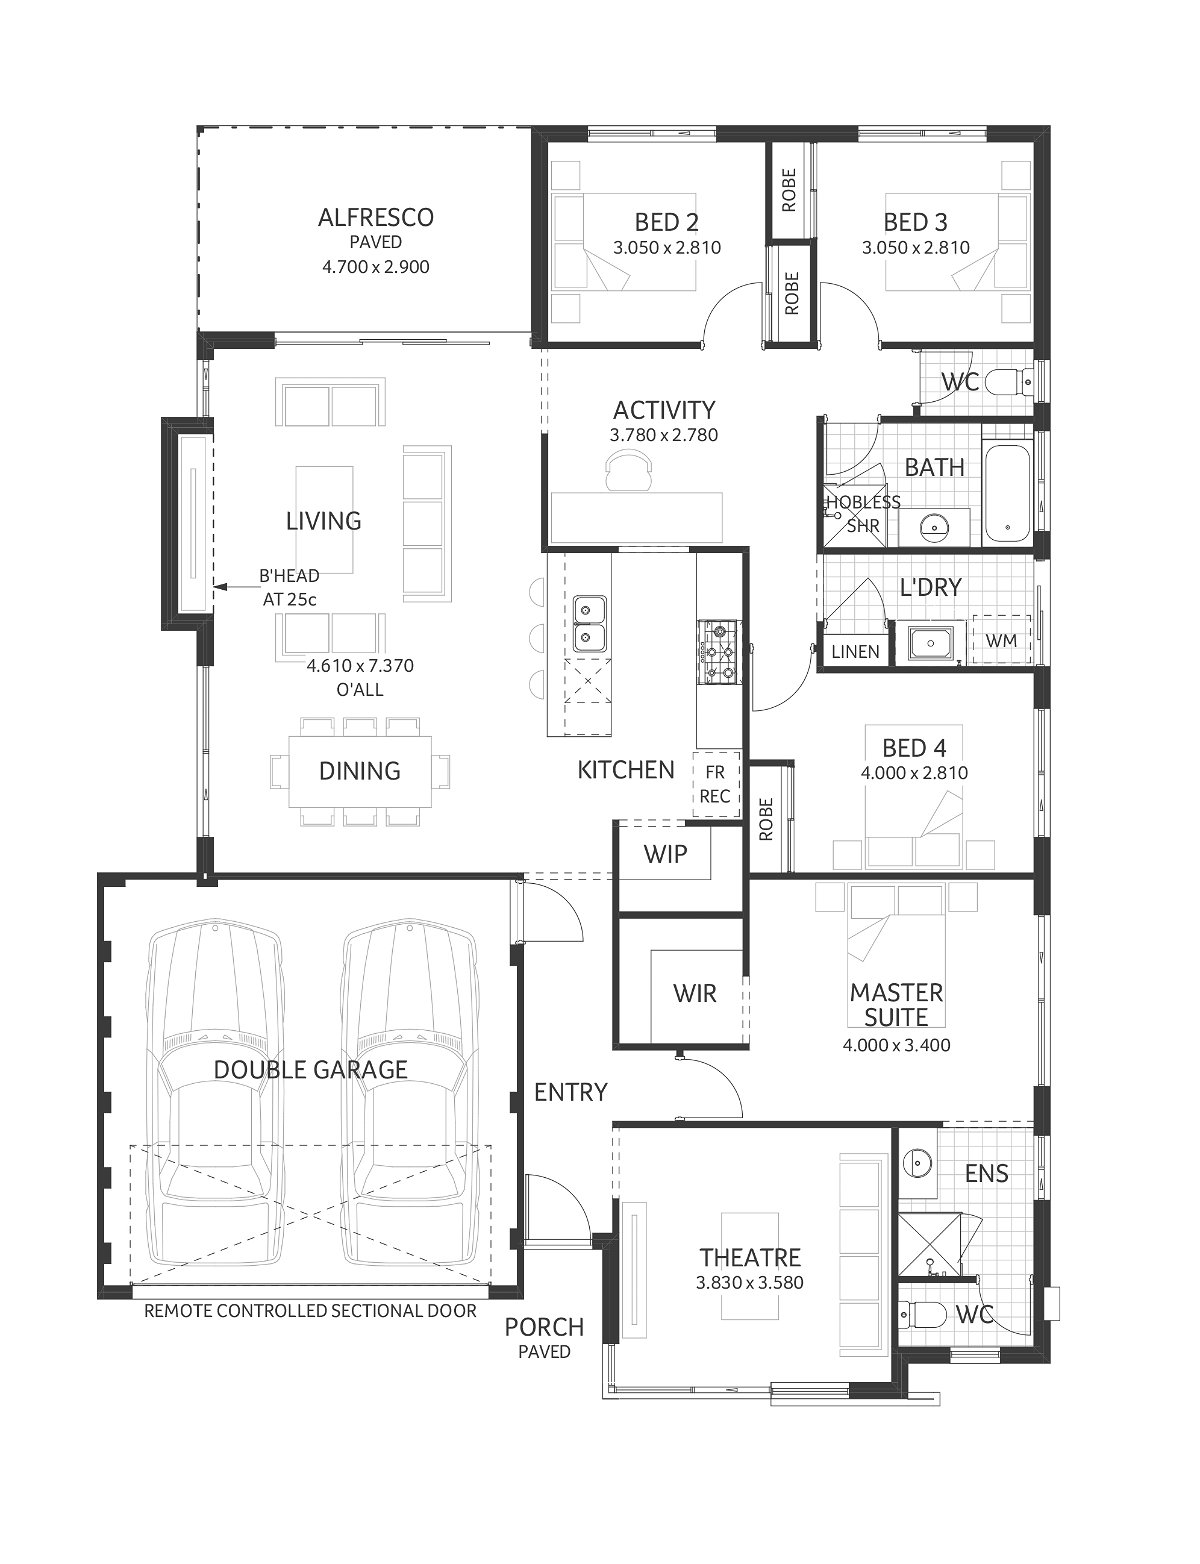 Plunkett Homes - Santana | Lifestyle - Floorplan - Santana Lifestyle Marketing Plan Cropped